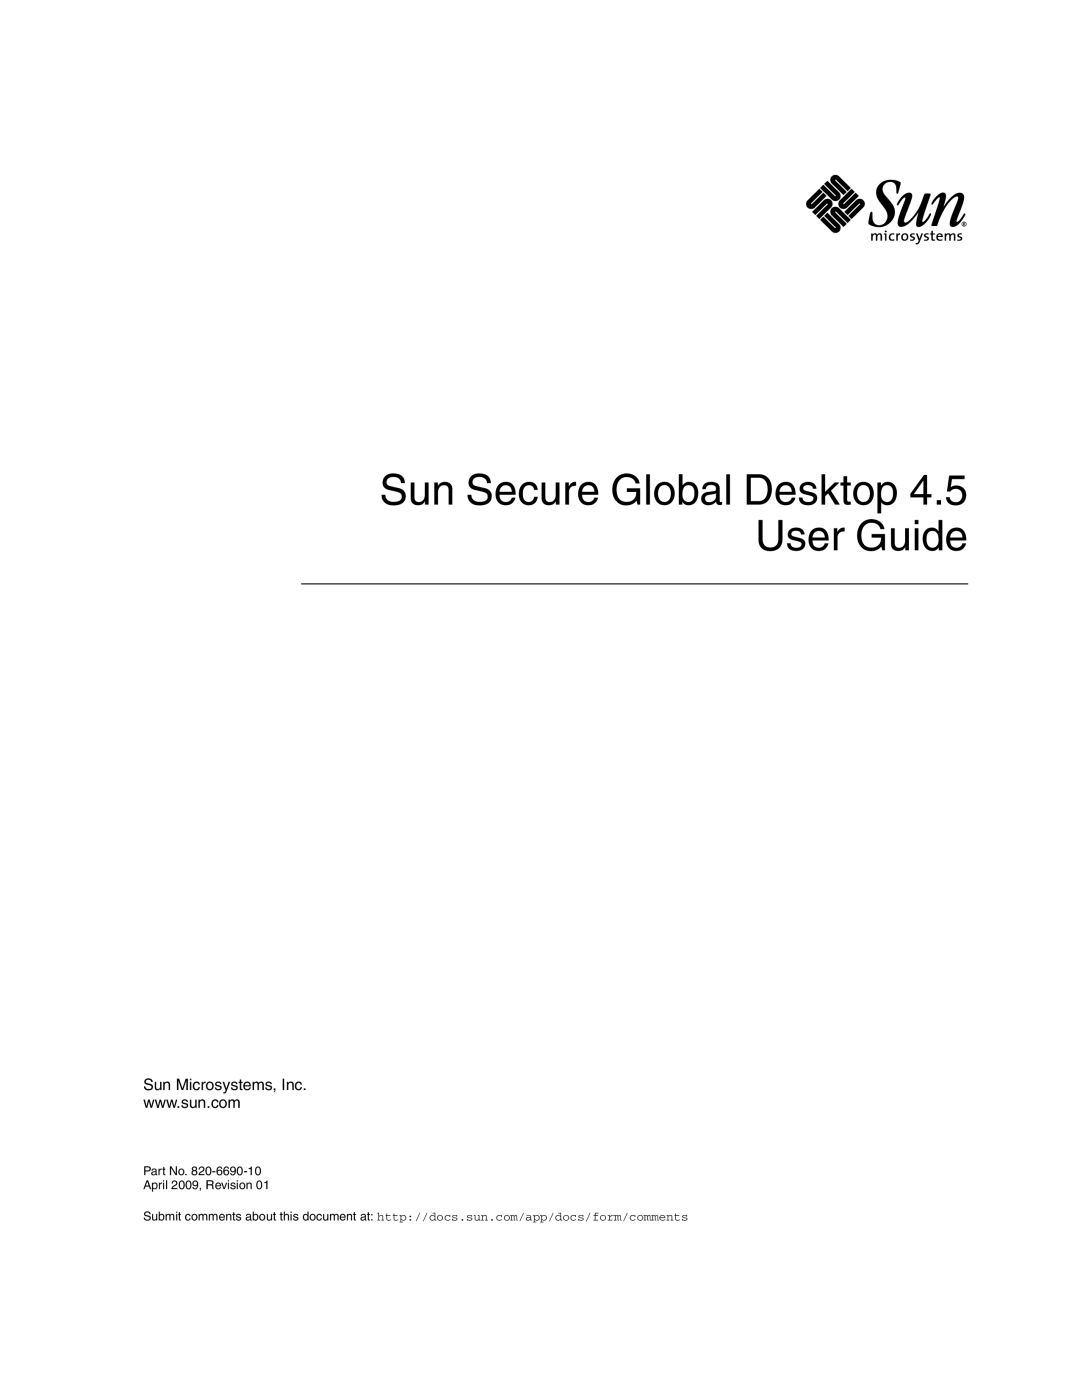 Sun Microsystems 4.5 manual Sun Secure Global Desktop User Guide, Sun Microsystems, Inc, April 2009, Revision 